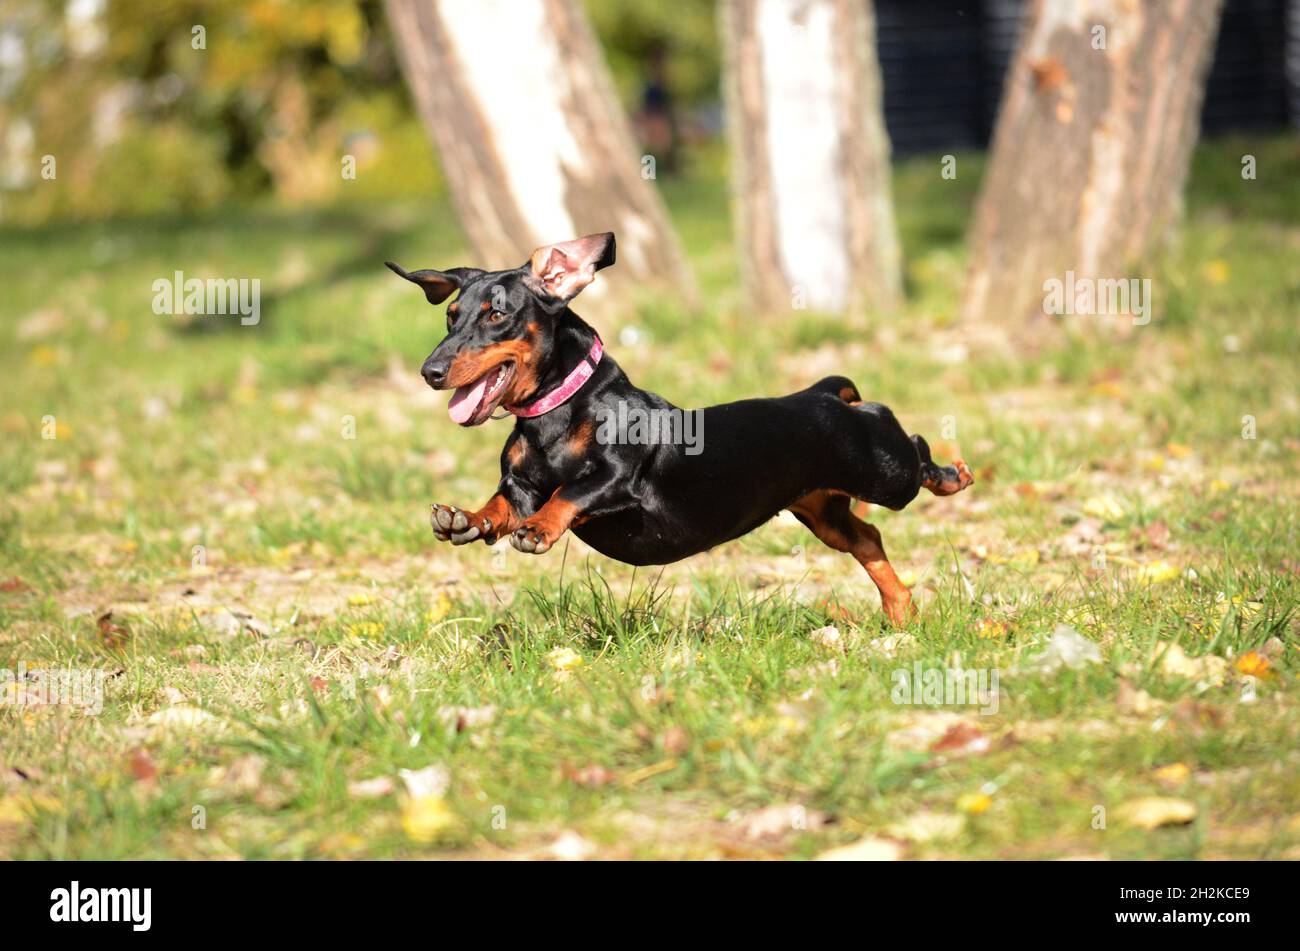 Dachshund dog running and jumping Stock Photo